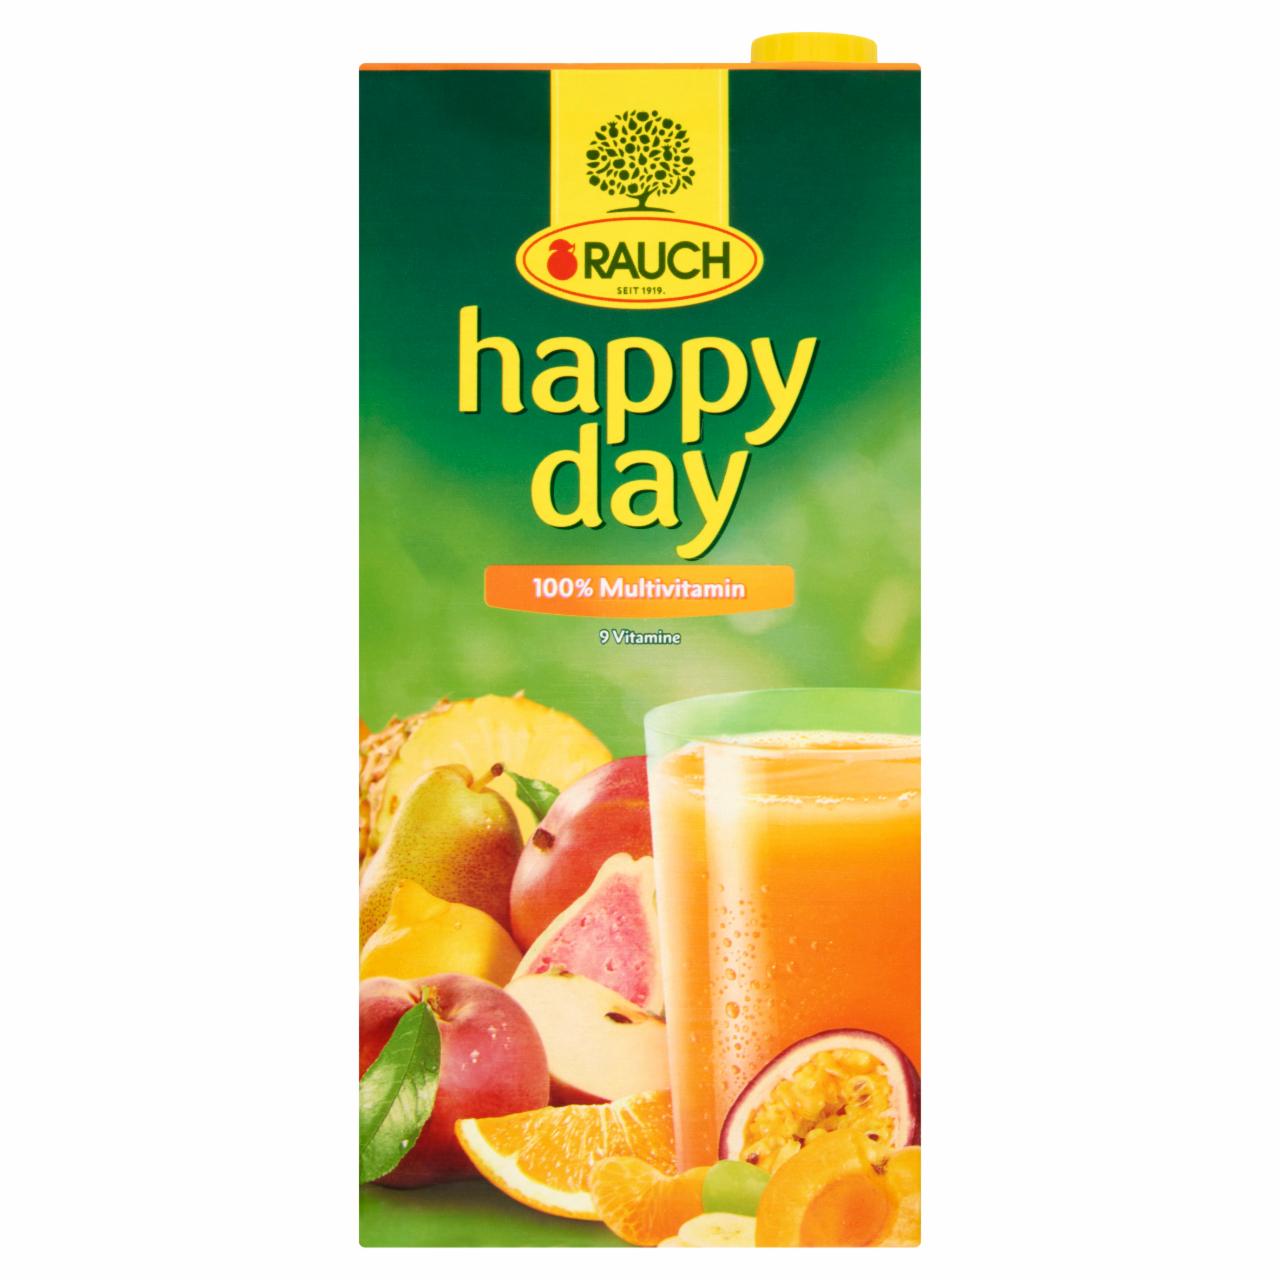 Képek - Rauch Happy Day 100% multivitaminlé sűrítményekből és pürésűrítményekből 9 vitaminnal 2 l